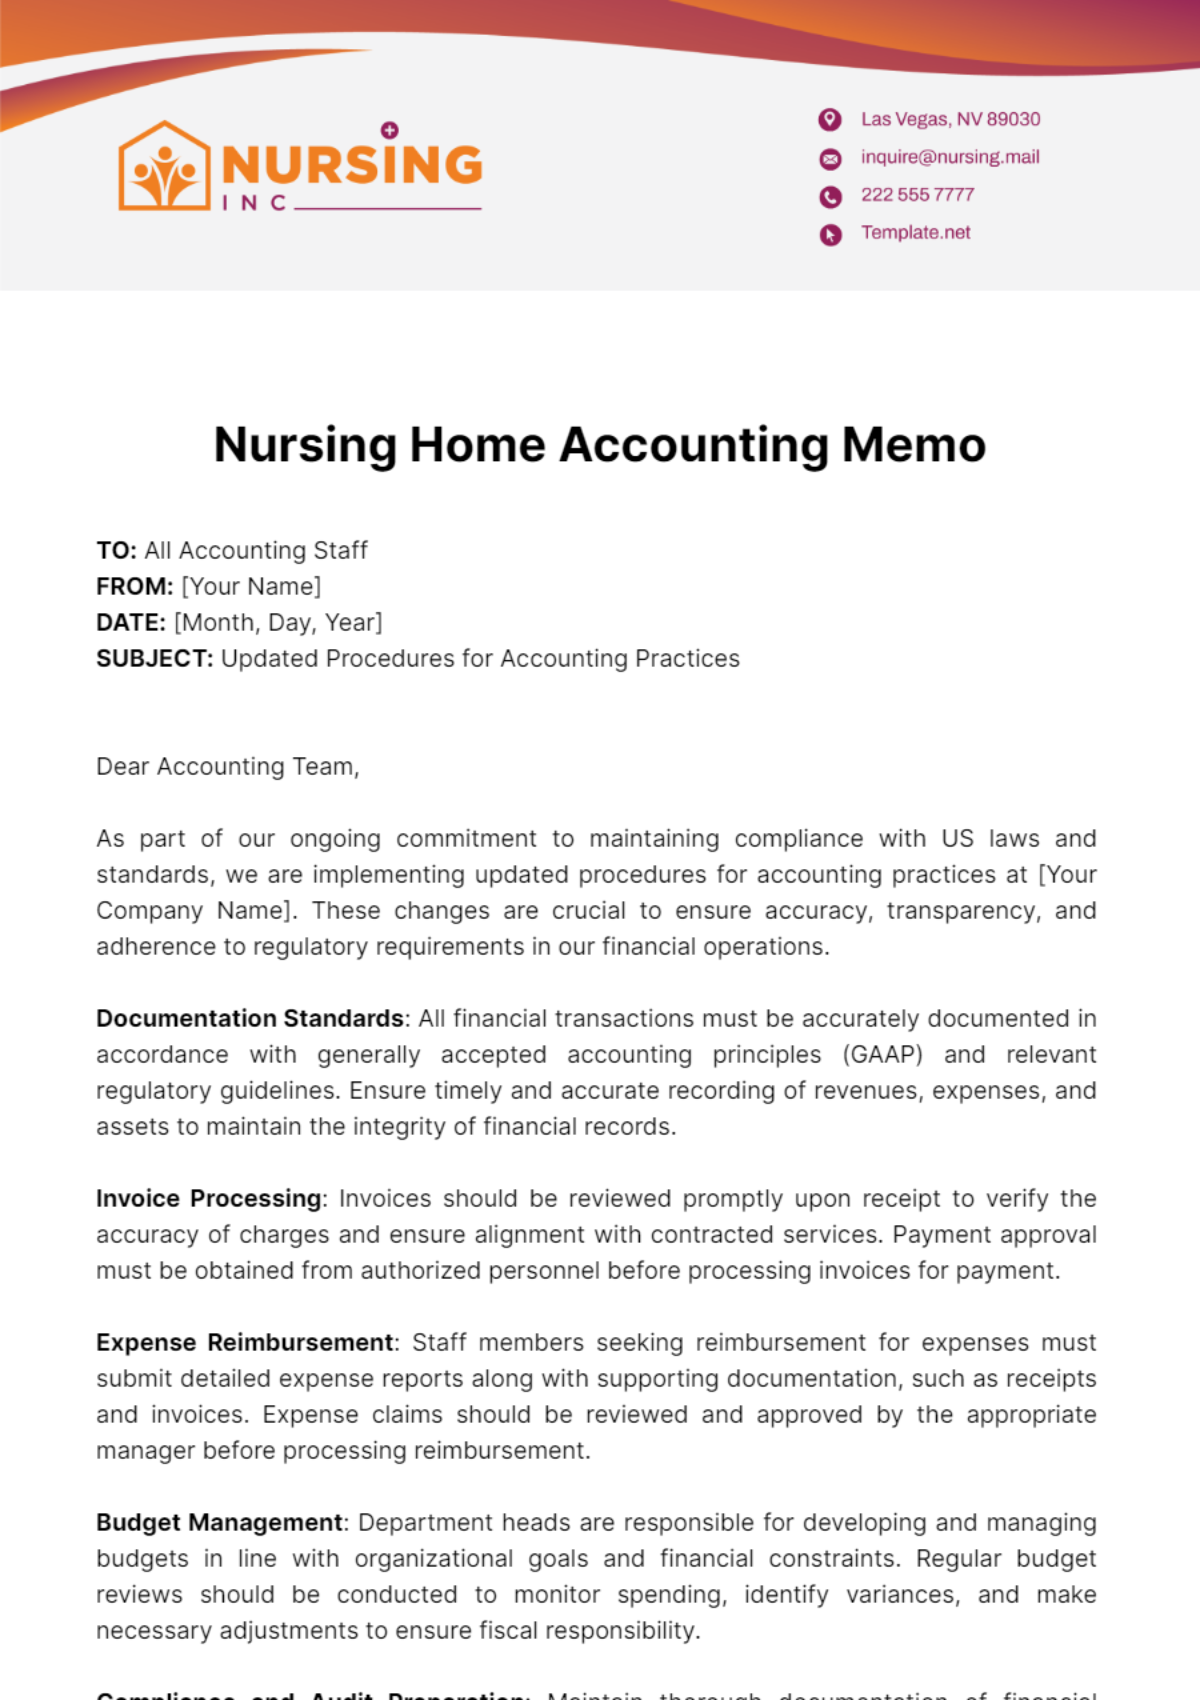 Nursing Home Accounting Memo Template